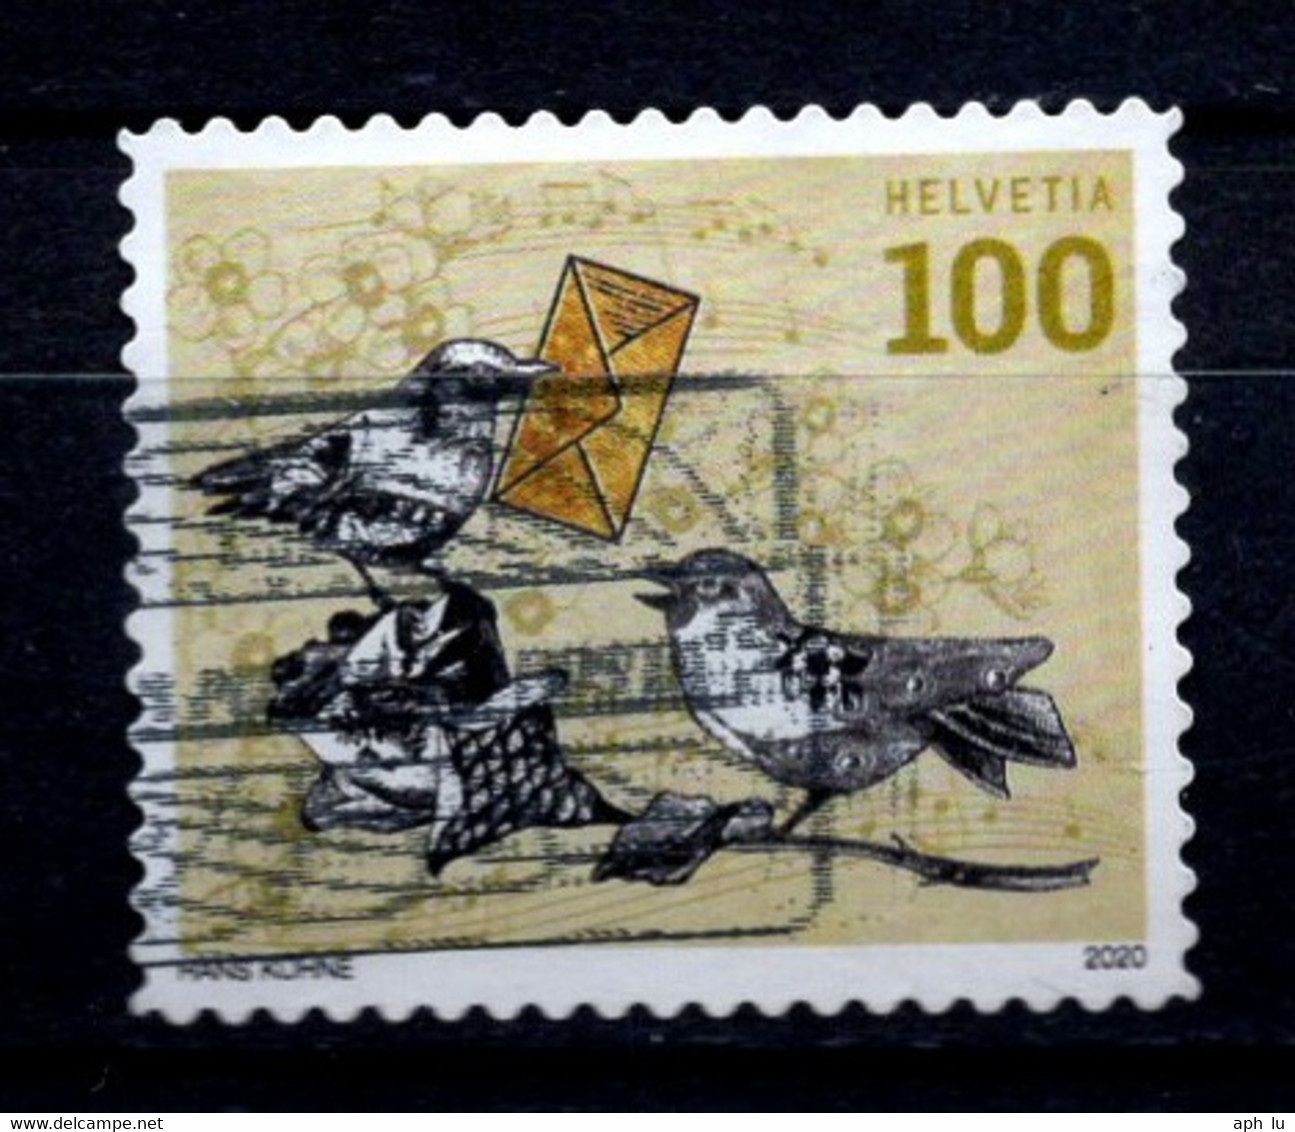 Marke Aus Dem Jahre 2020 (b410704) - Used Stamps